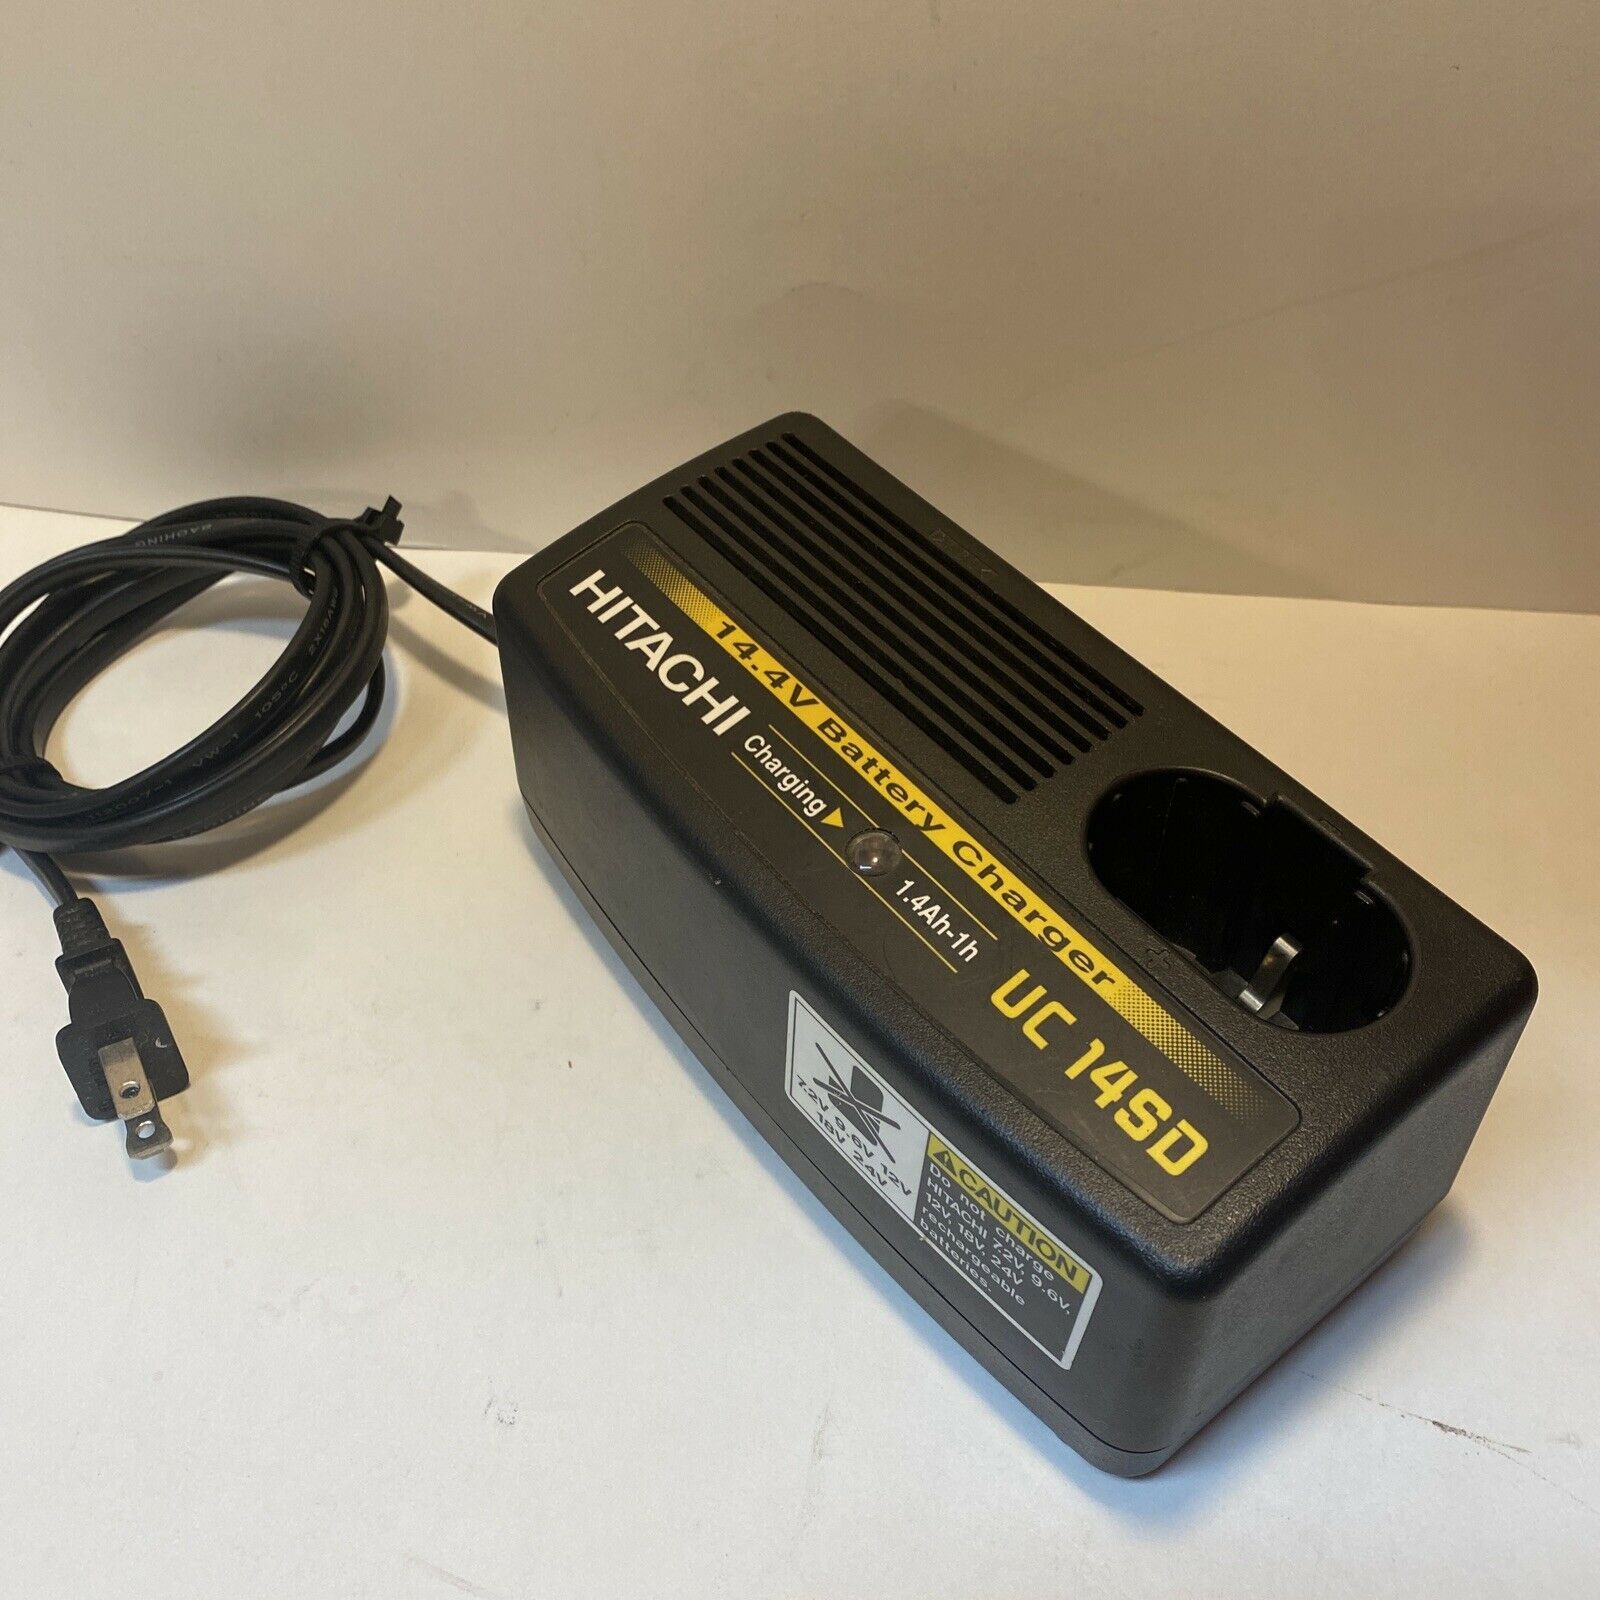 US Charger For Black & Decker 9.6V 12V 14.4V 18V Ni-MH/Ni-CD Slide  Style Battery